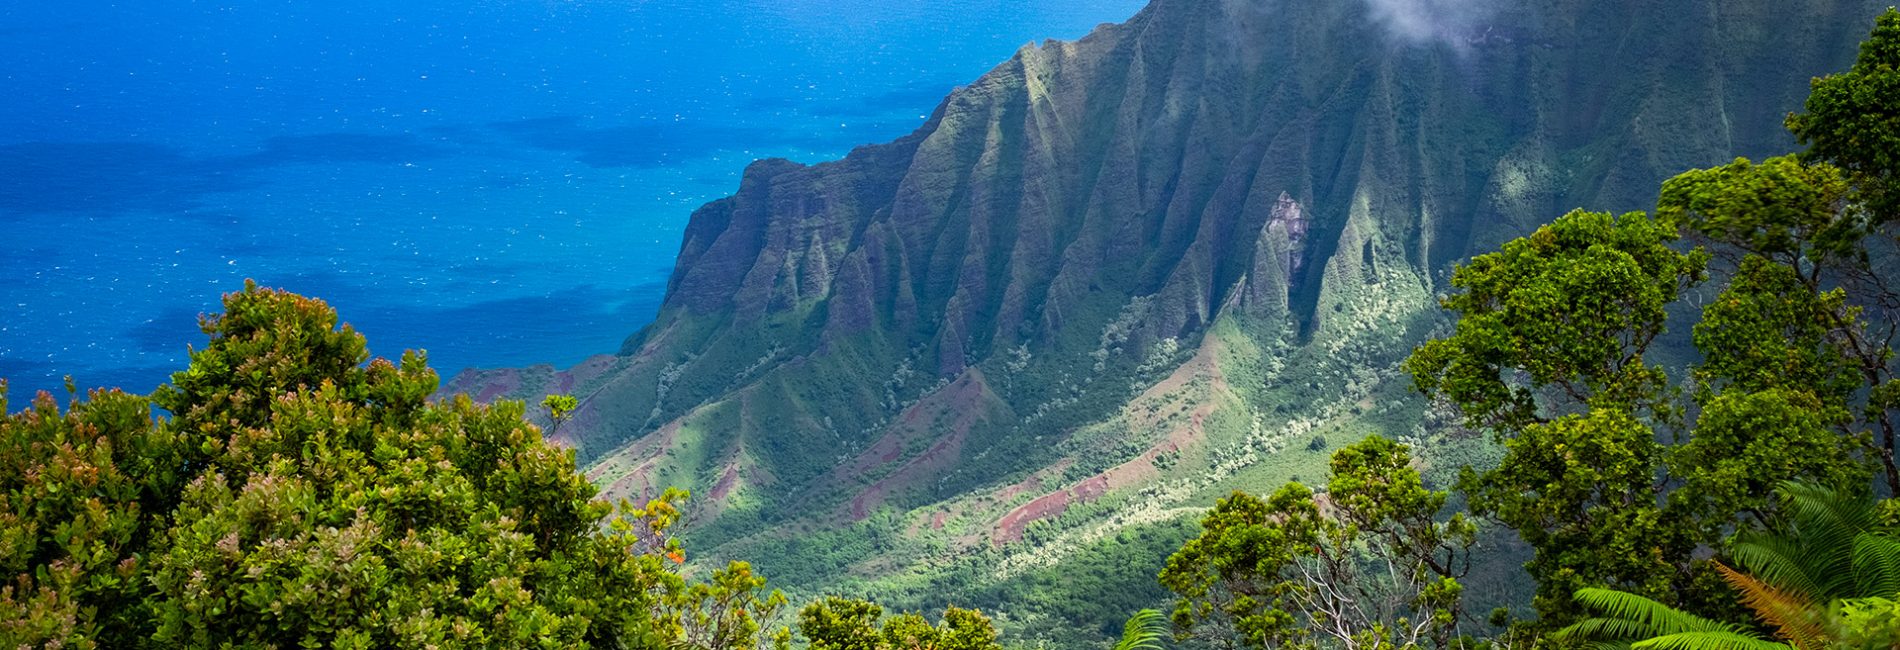 Aloha, ciel et terre